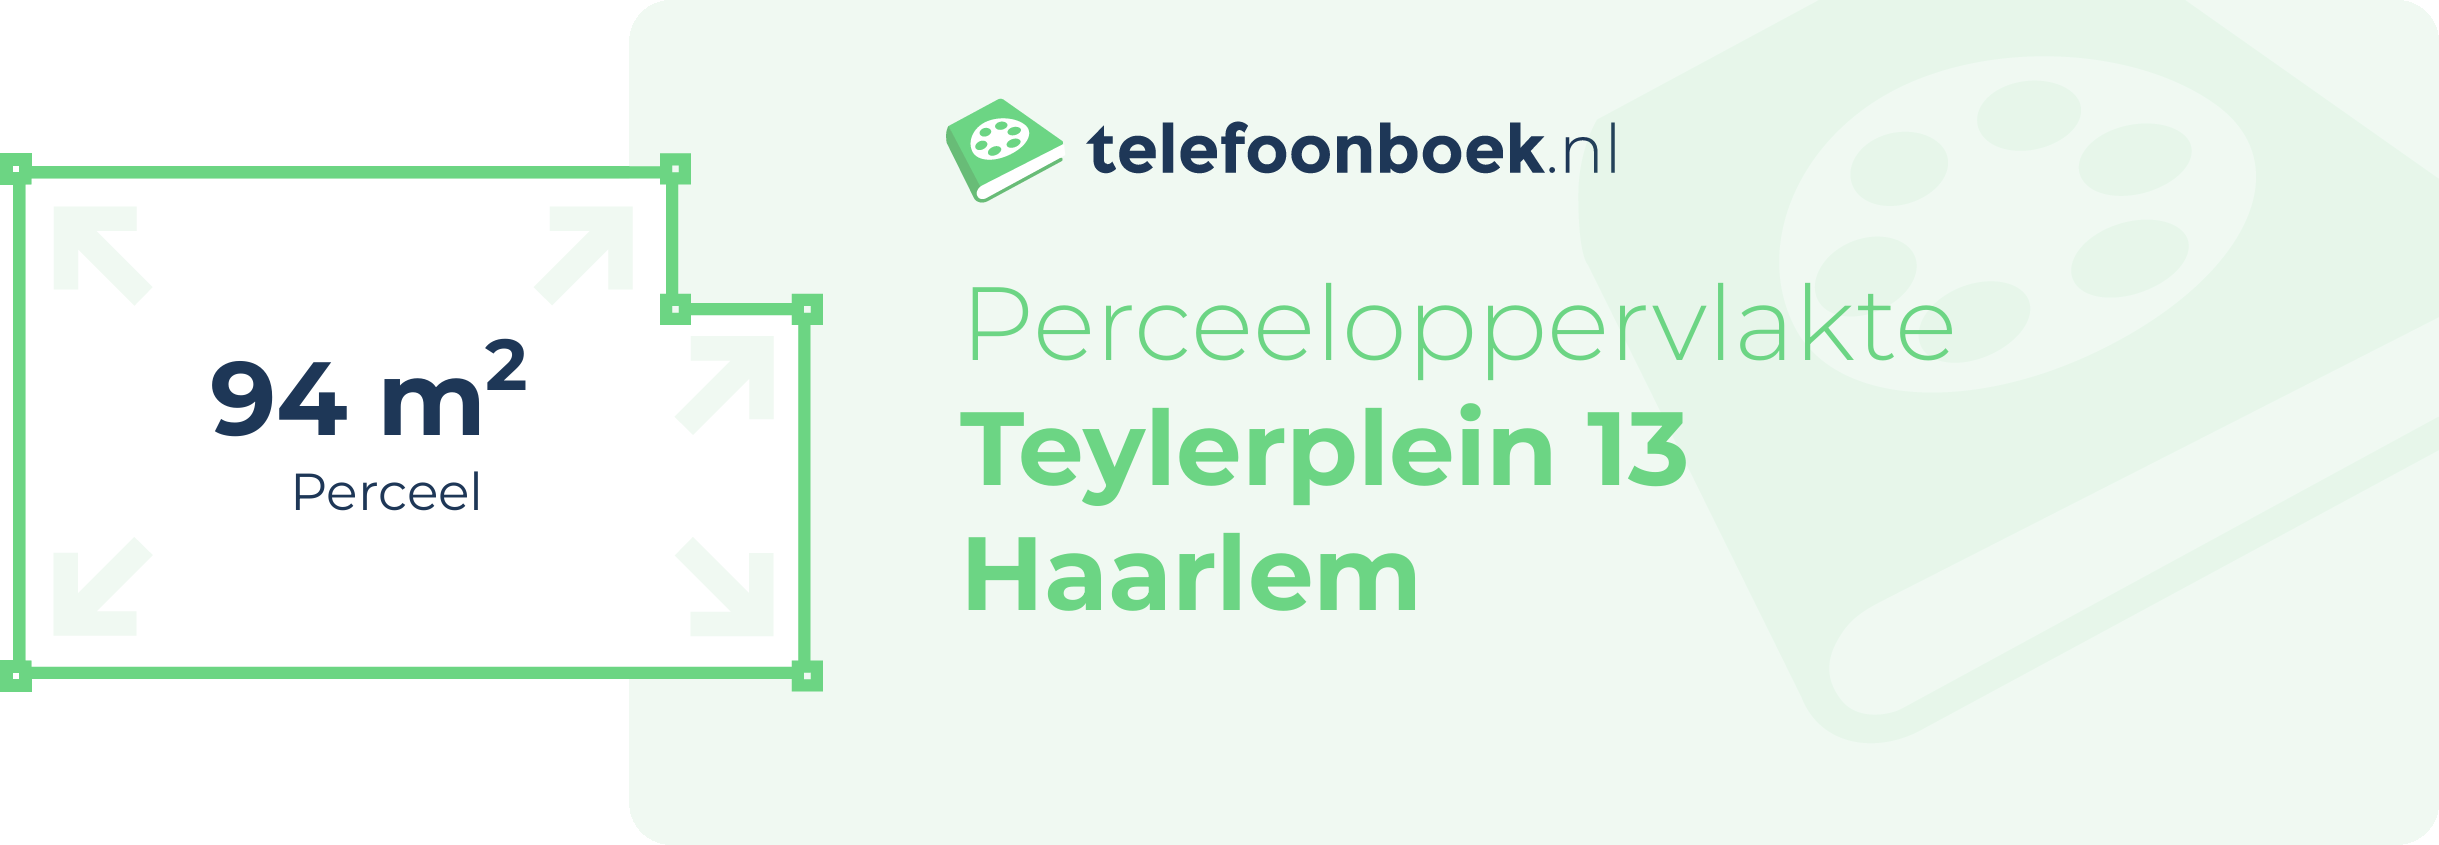 Perceeloppervlakte Teylerplein 13 Haarlem